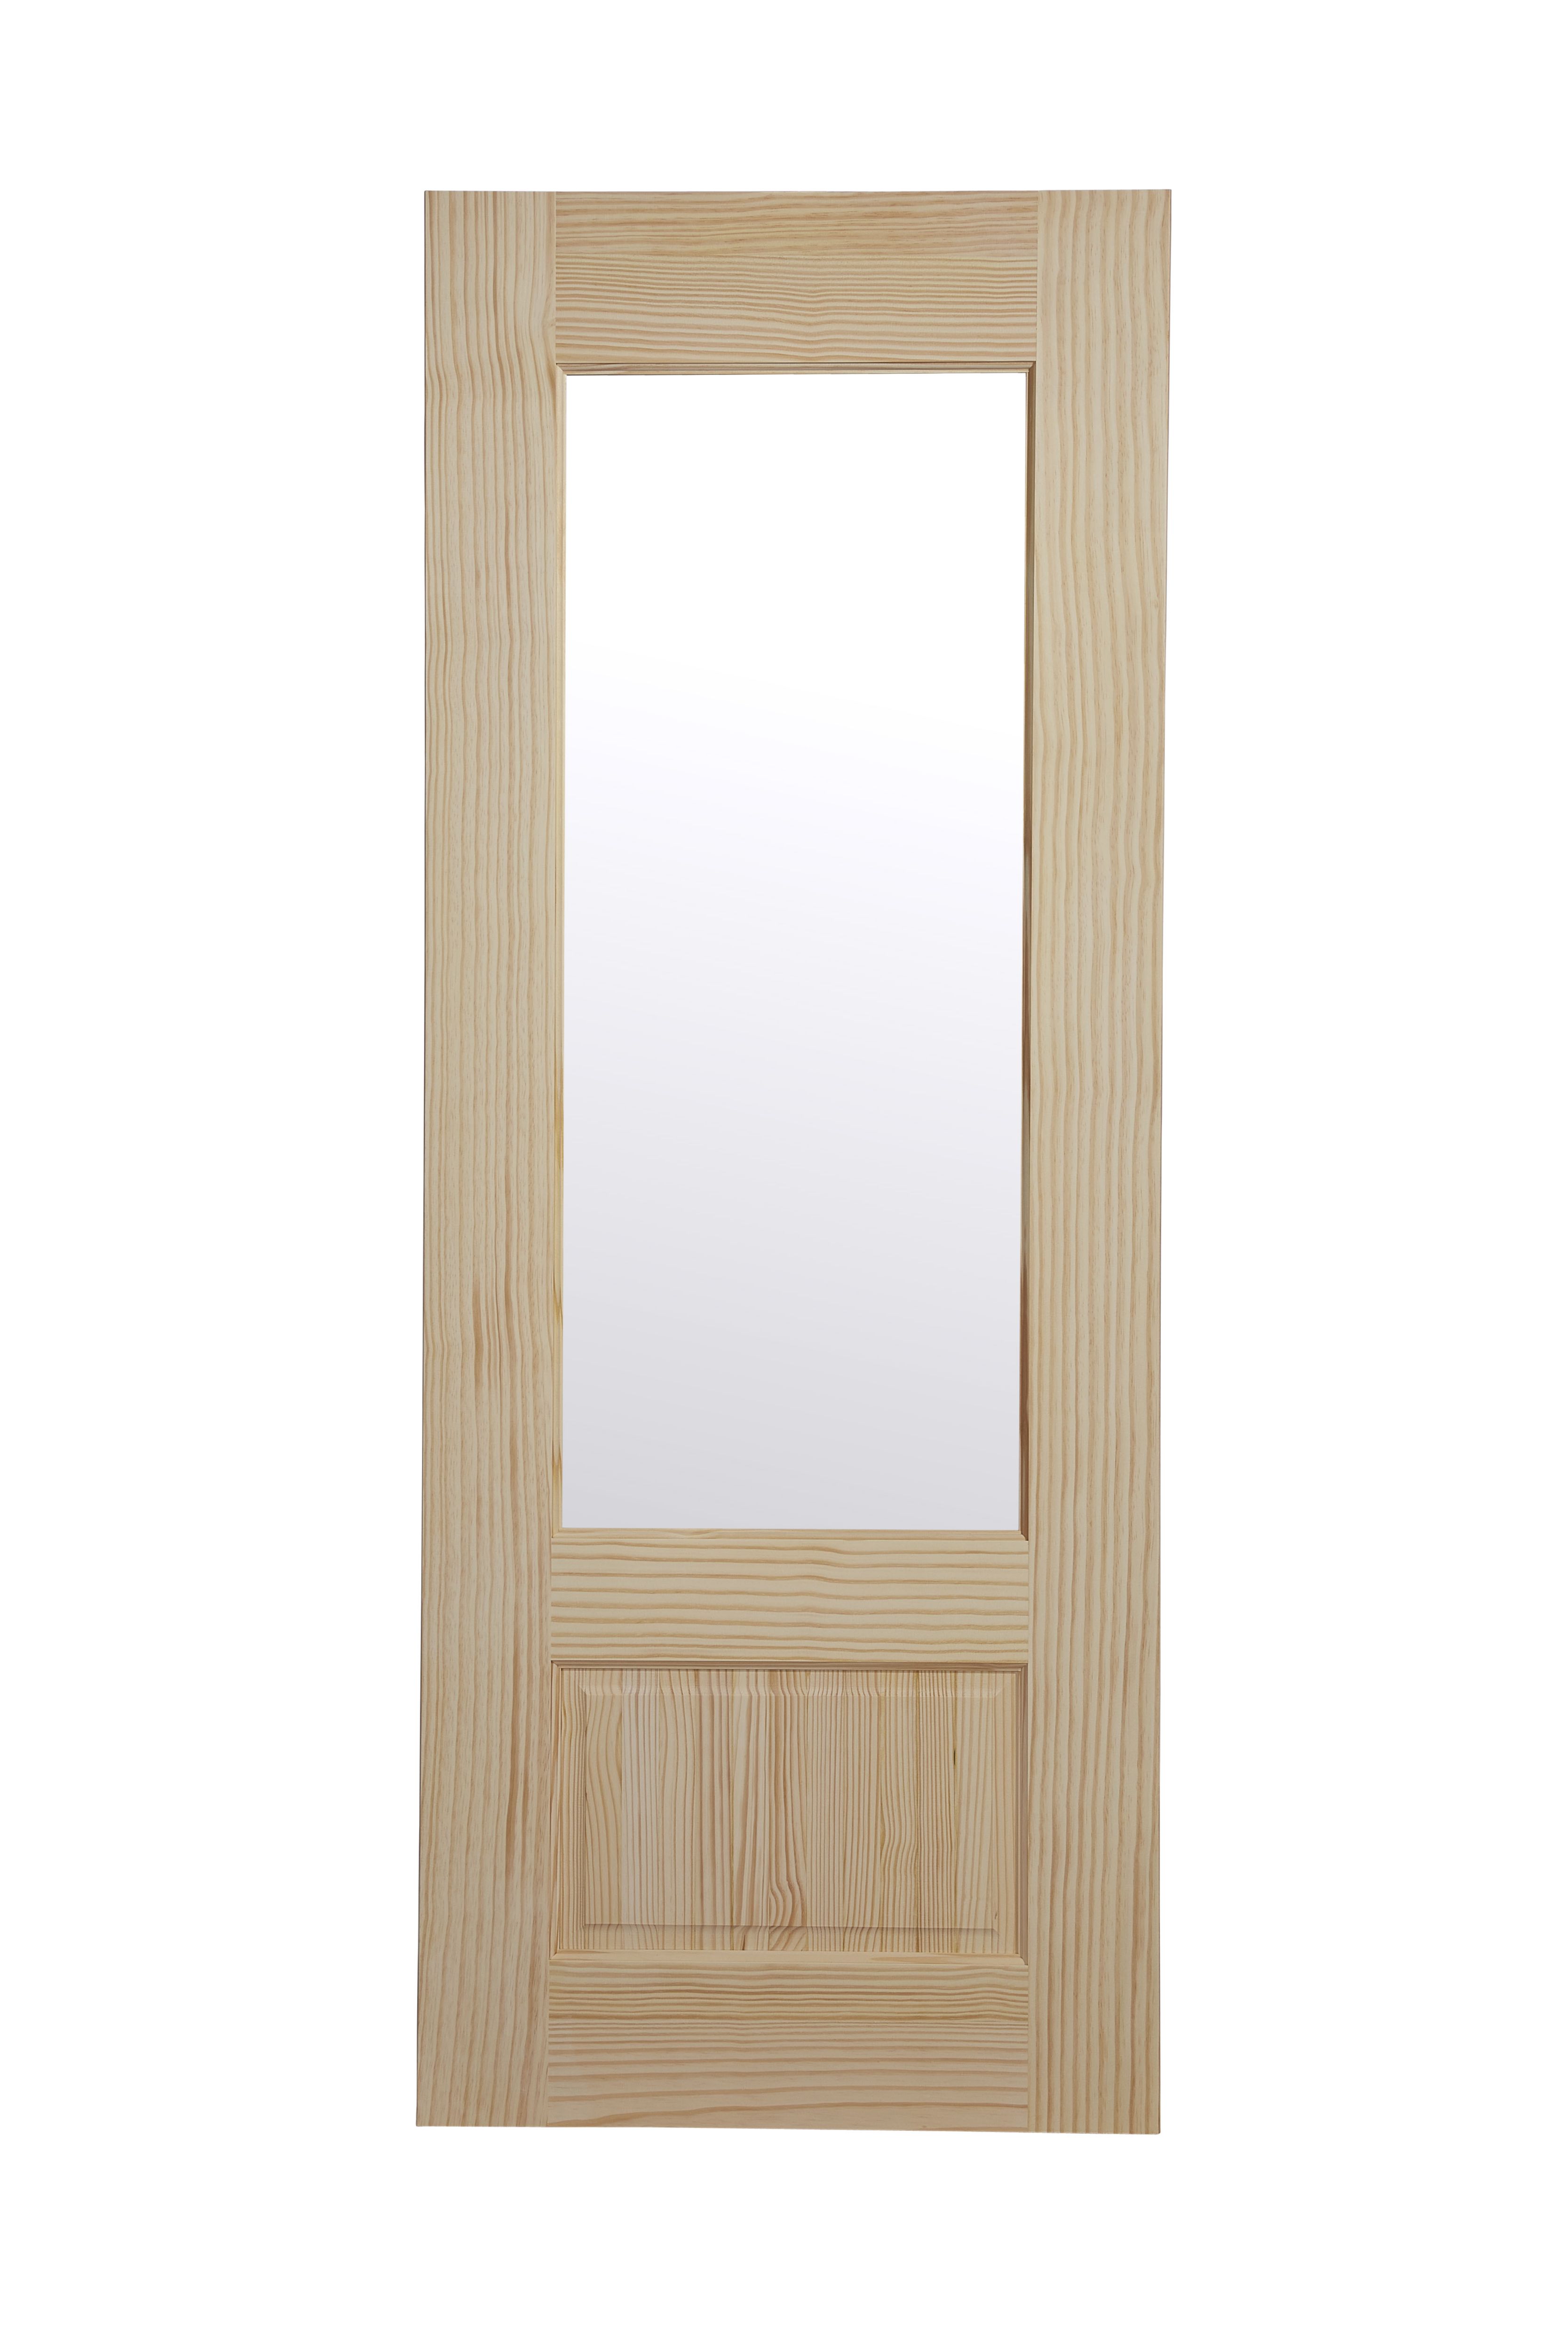 2 Lite 2 panel Clear Glazed Contemporary Pine veneer Internal Clear pine Door, (H)1981mm (W)686mm (T)35mm